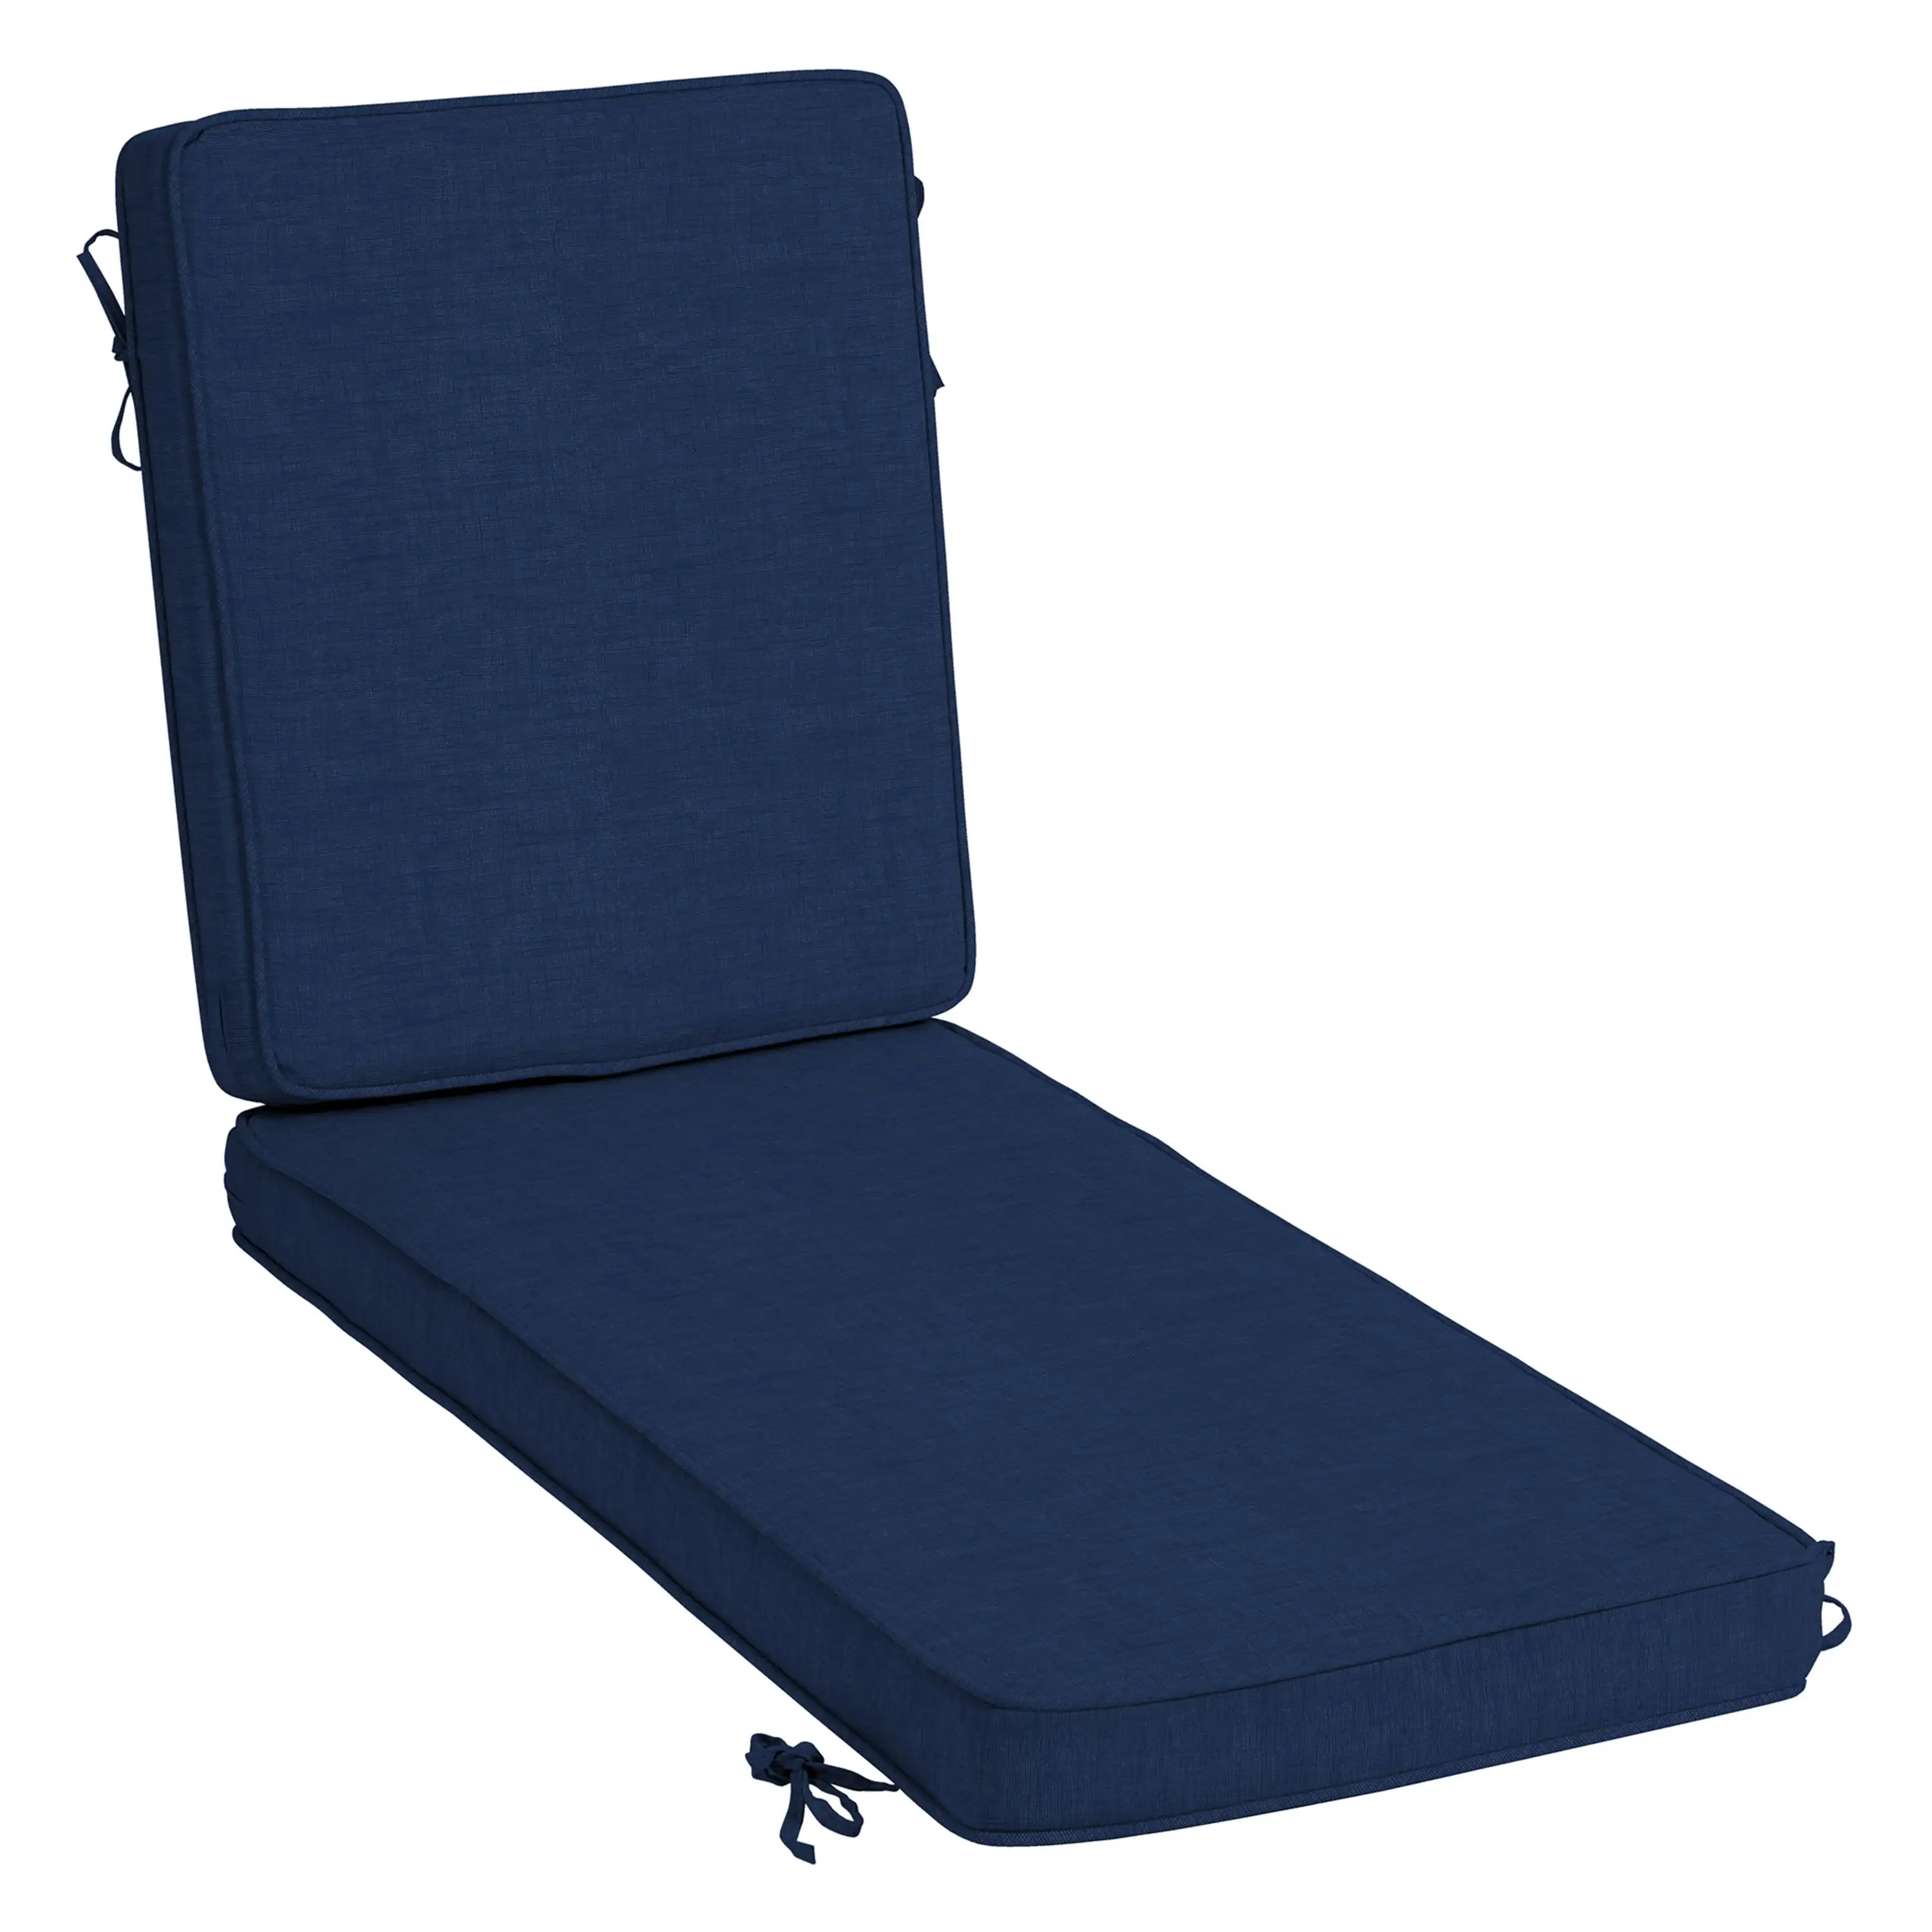 

Arden Selections ProFoam Essentials Outdoor Chaise Lounge Cushion 72 x 21, Sapphire Blue Leala